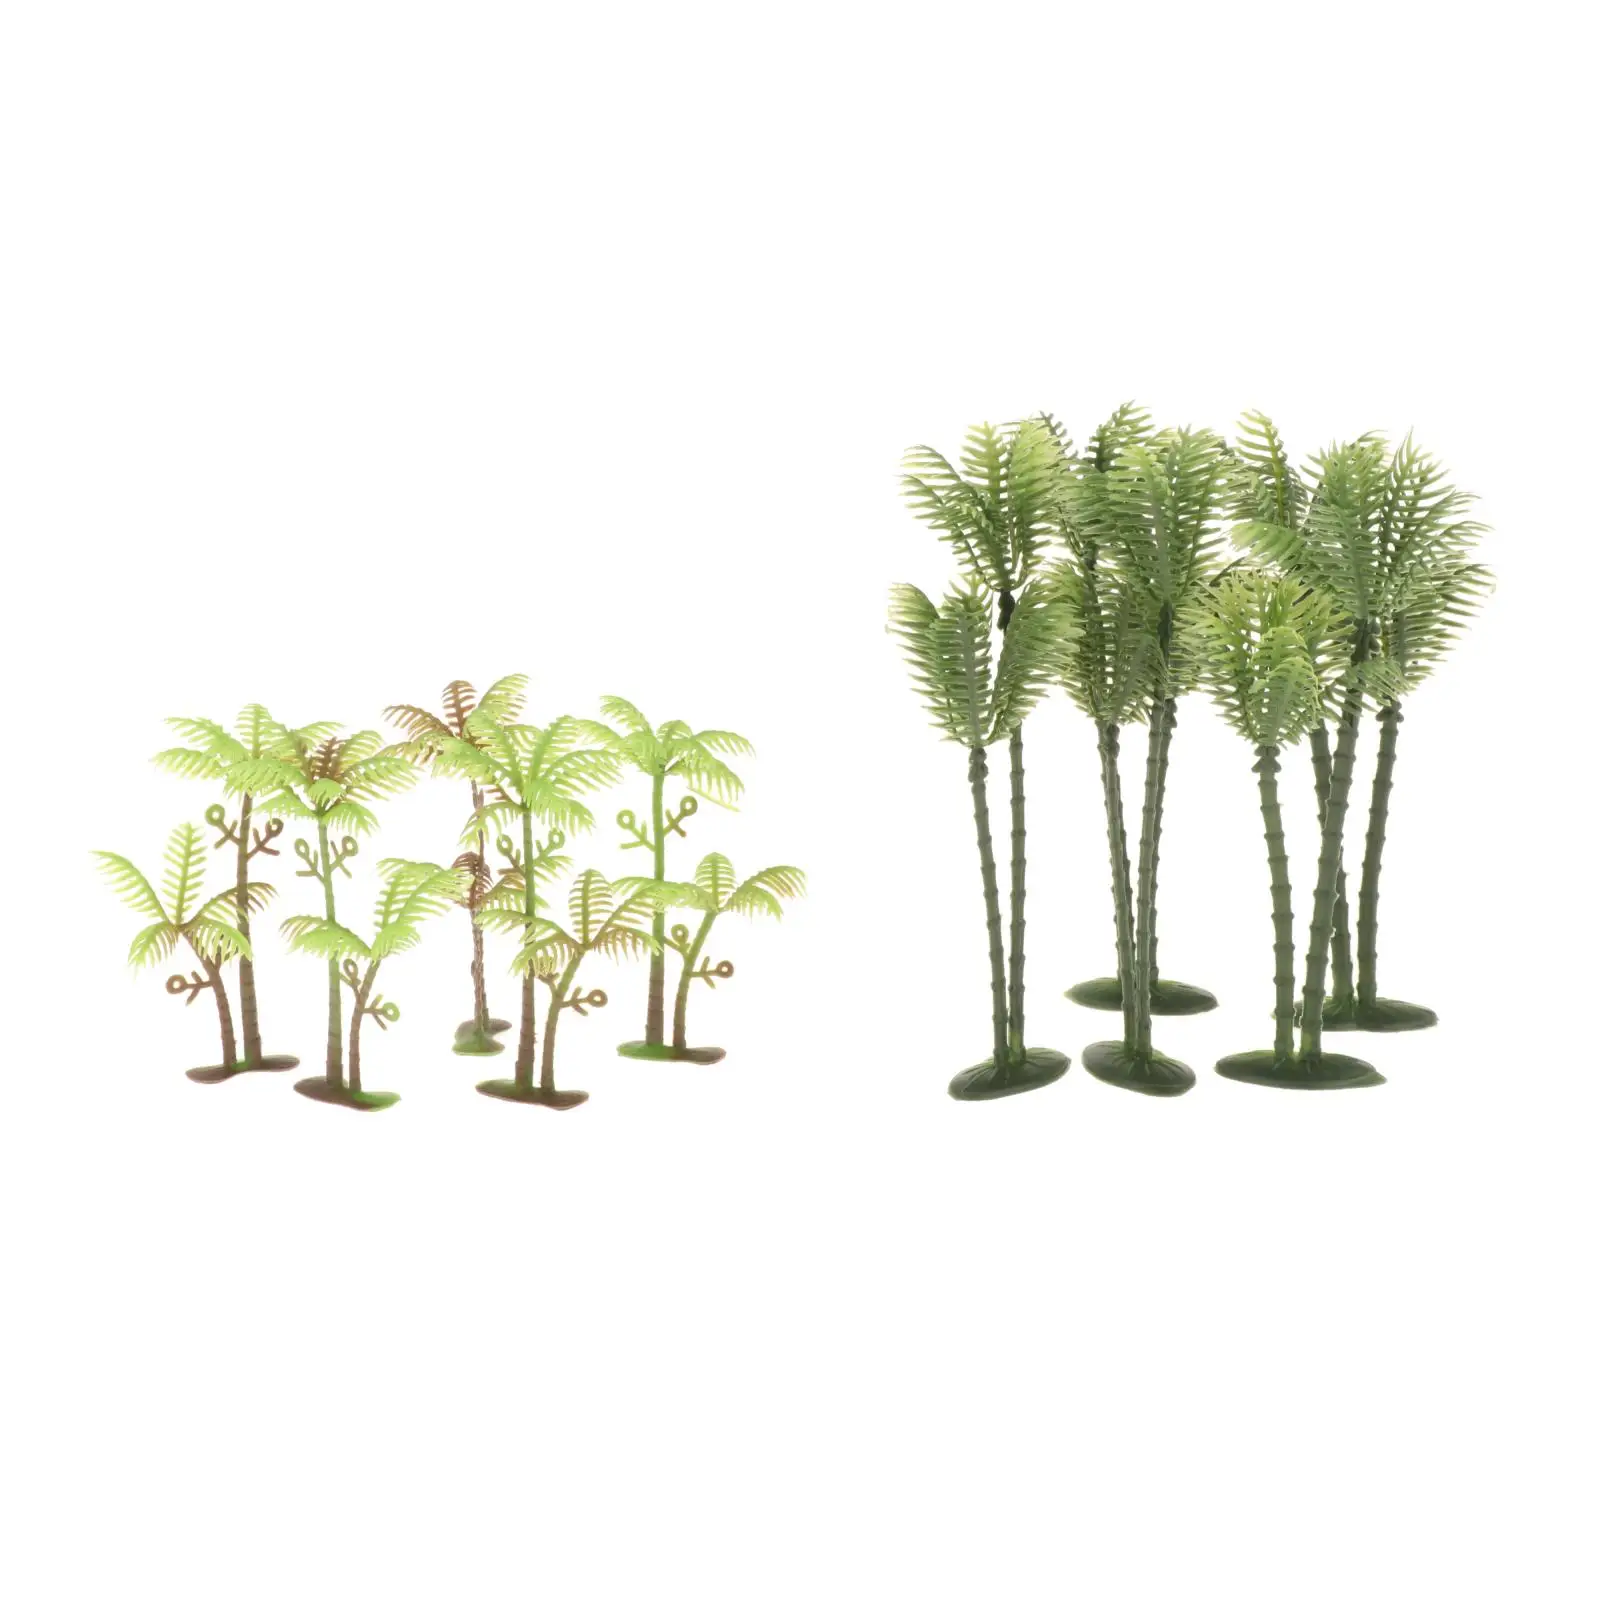 10x Coconut Trees Railway Train Garden Architecture Landscape Model 1/75 1/150 Scenery Trees Diorama Decor OO N Scale Green